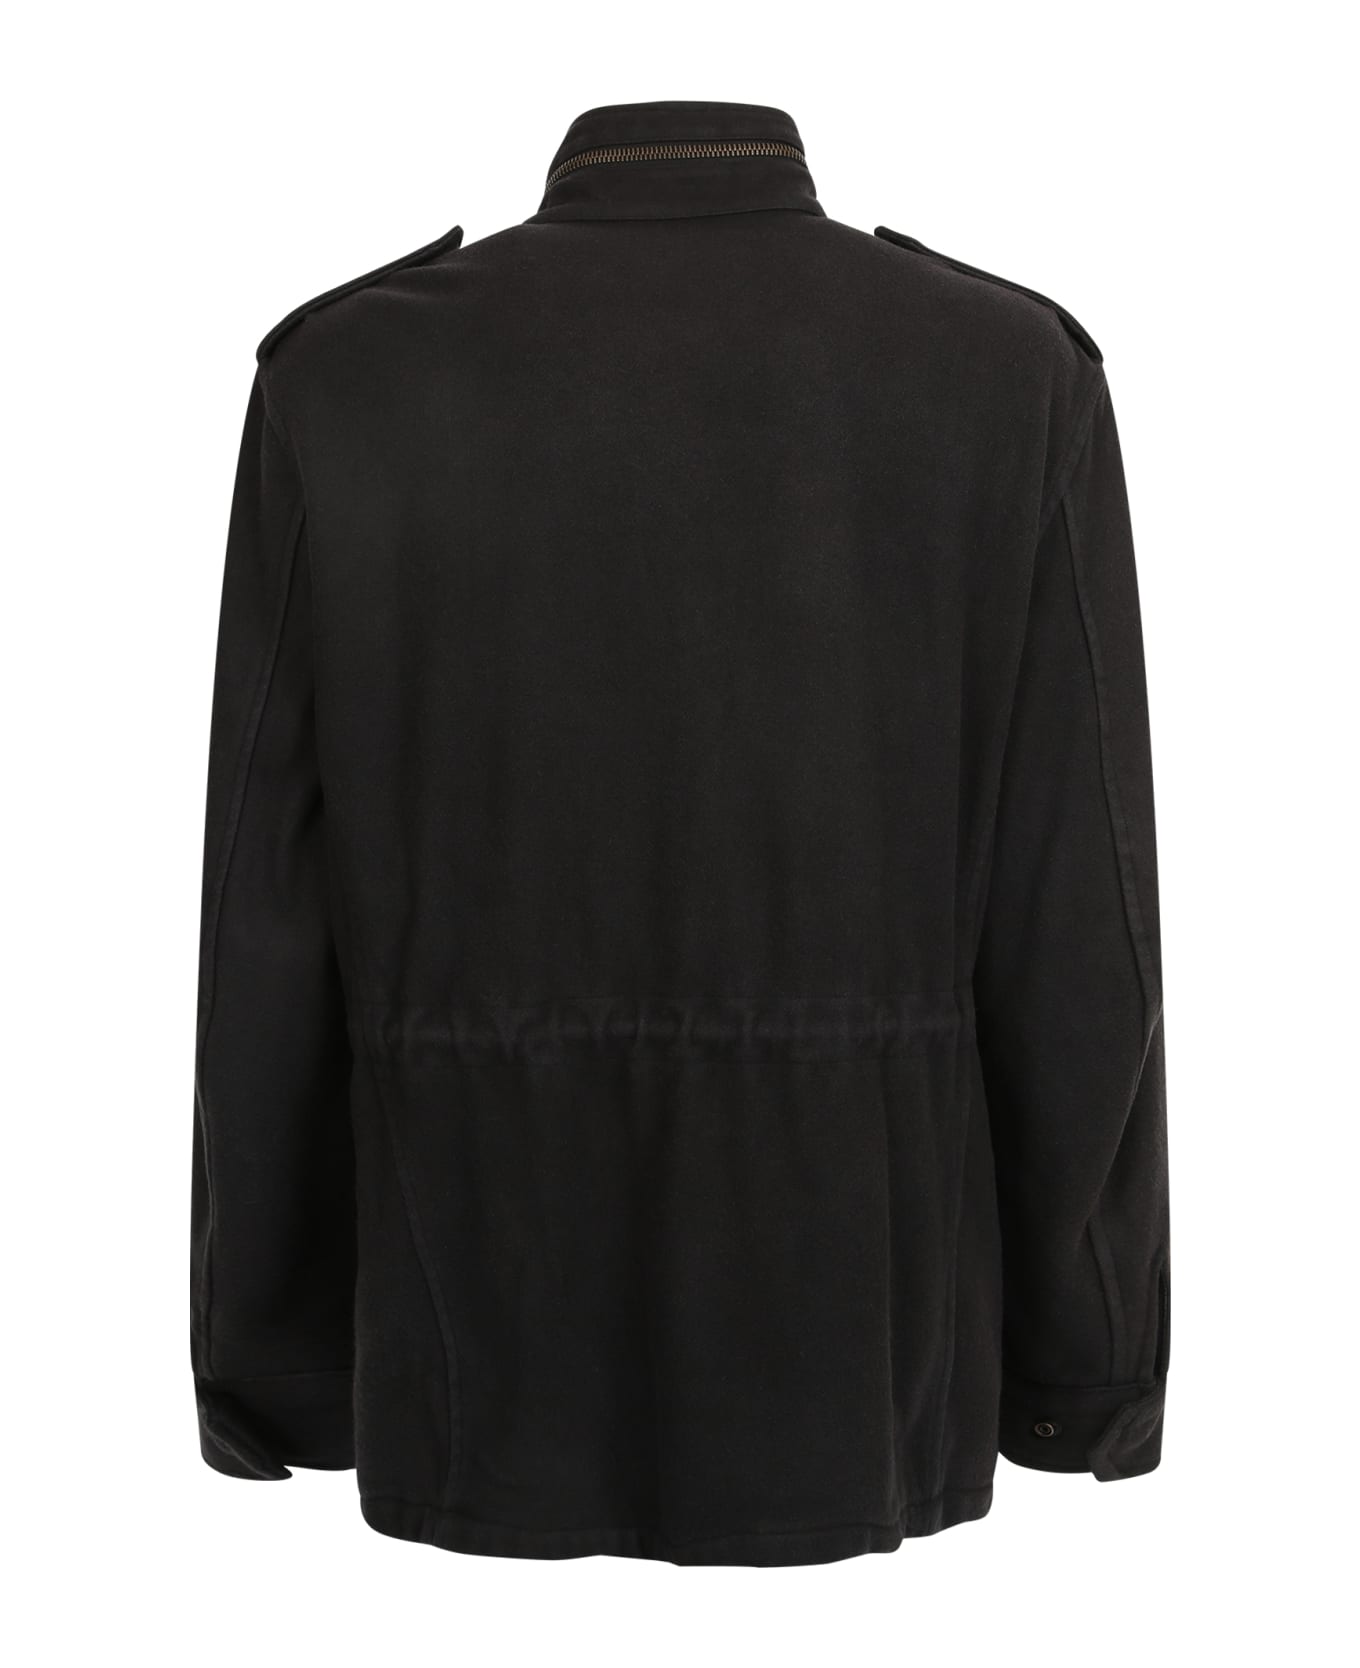 Original Vintage Style Zipped Jacket - Black